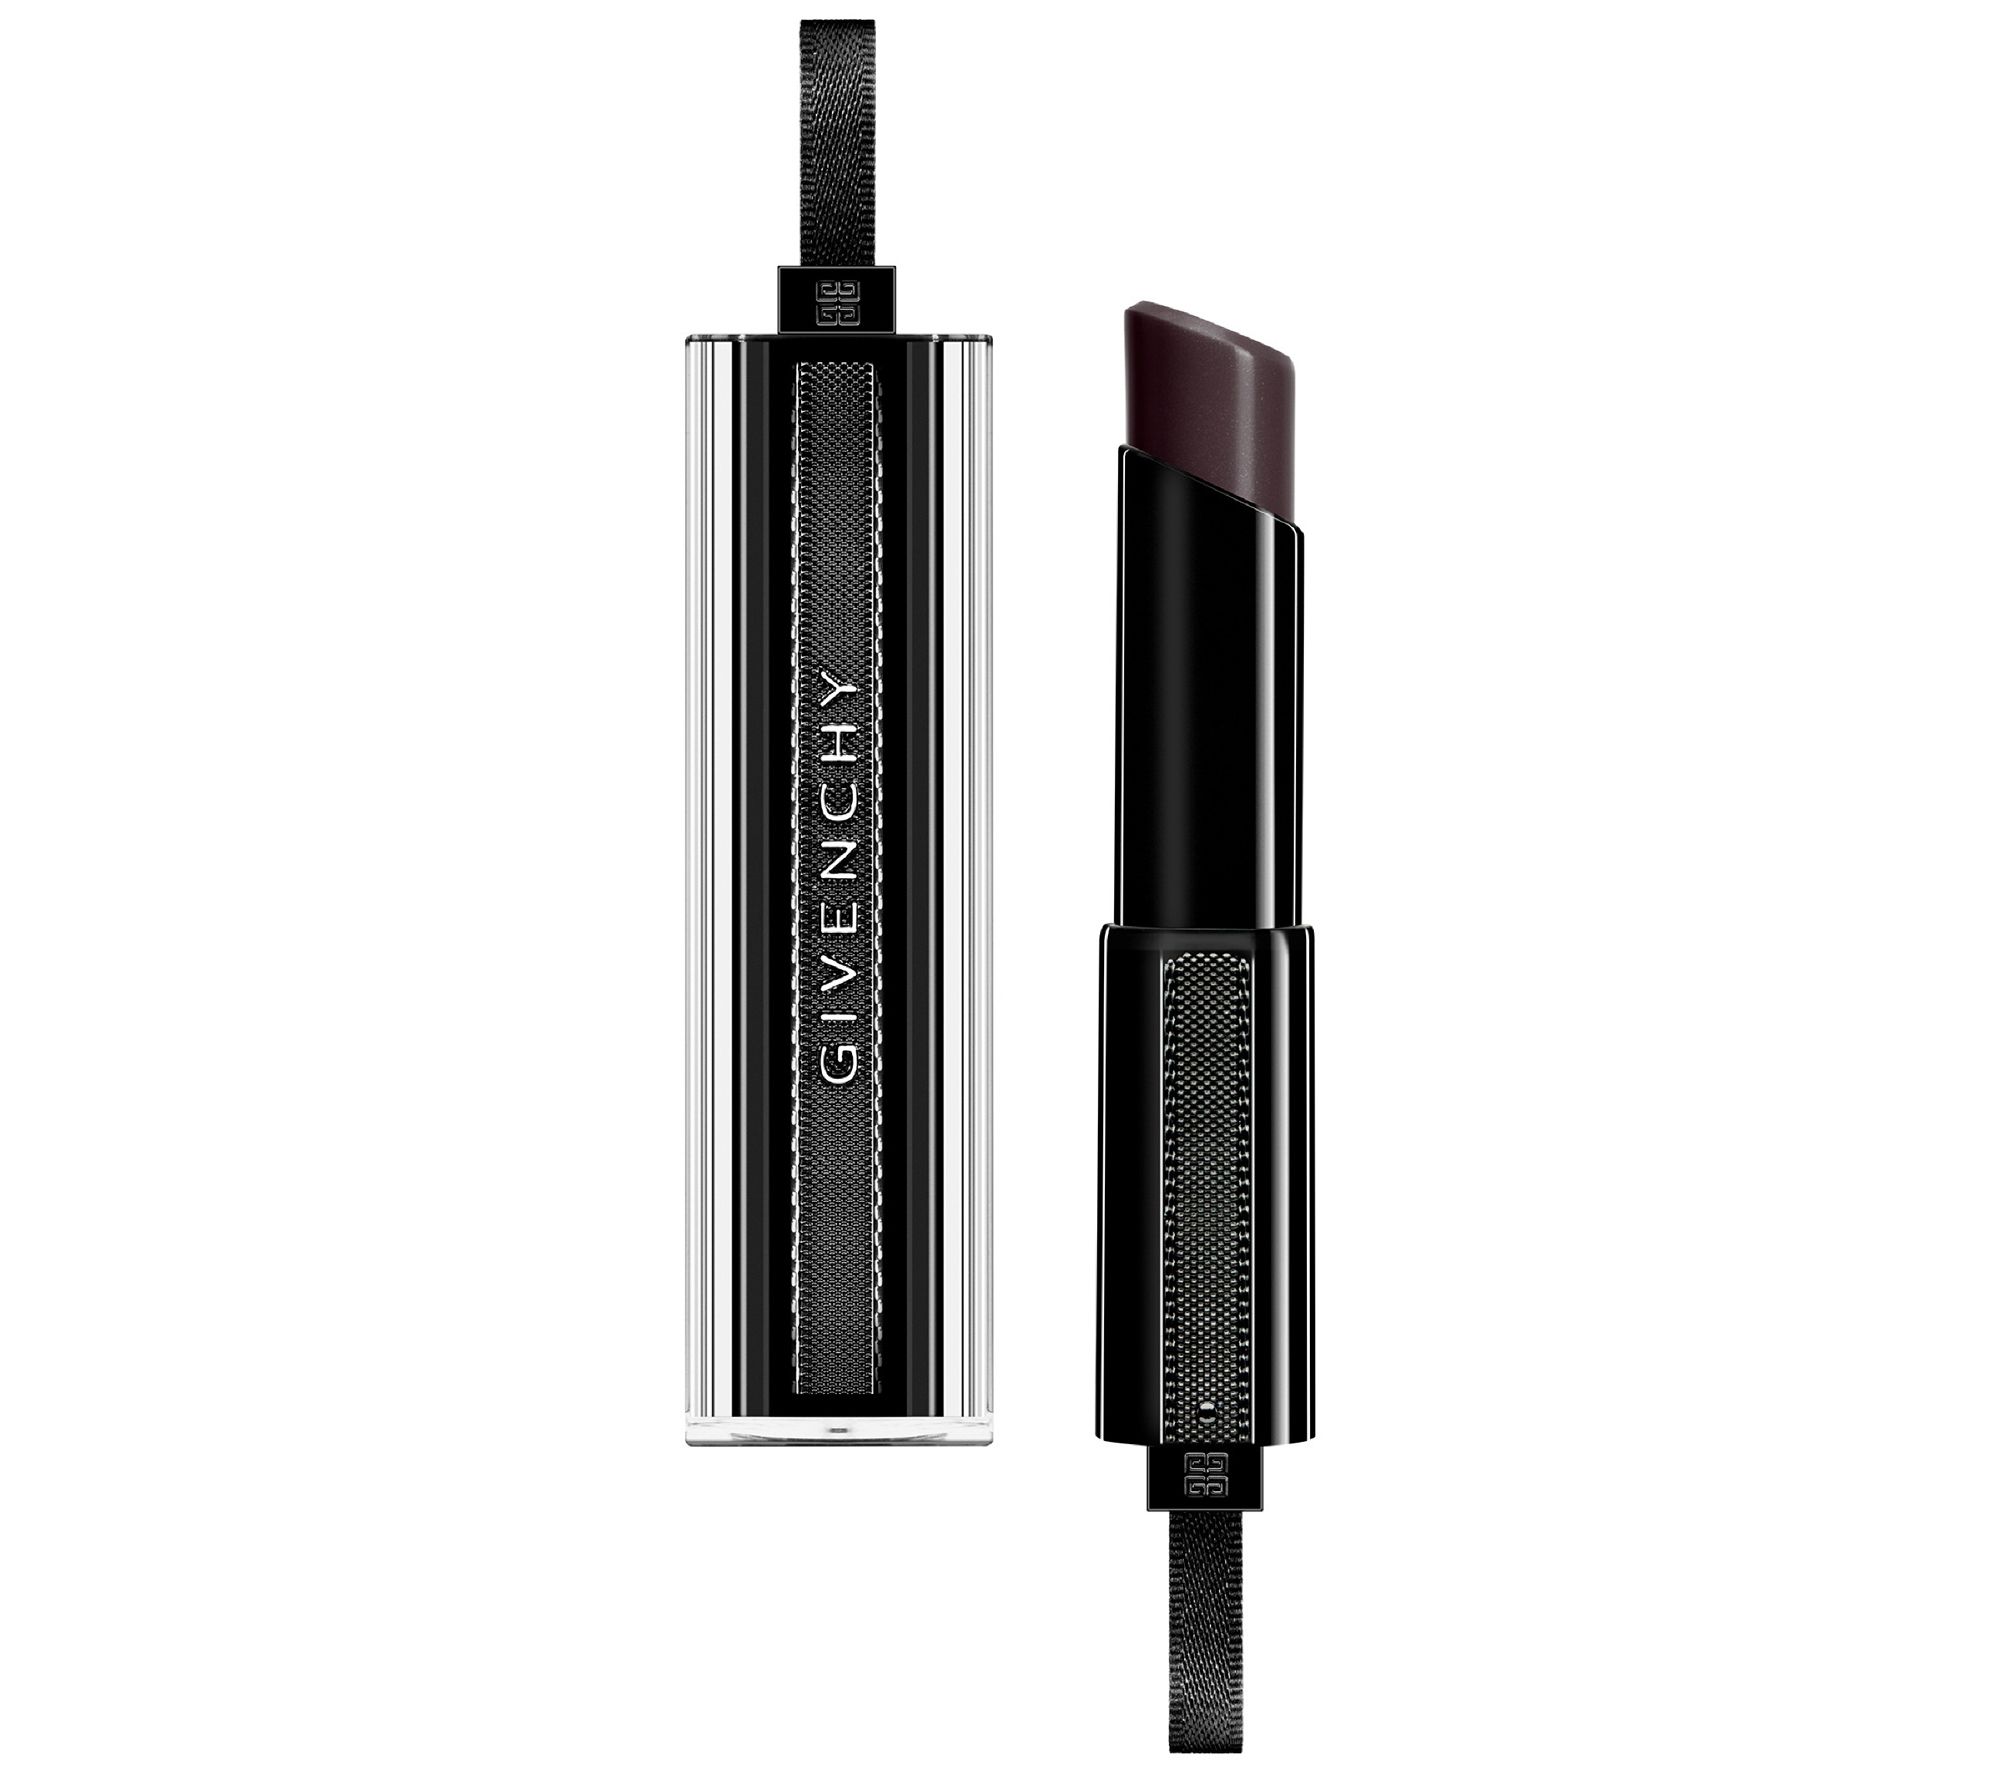 Givenchy Rouge Interdit Temptation Black Magic Lipstick 